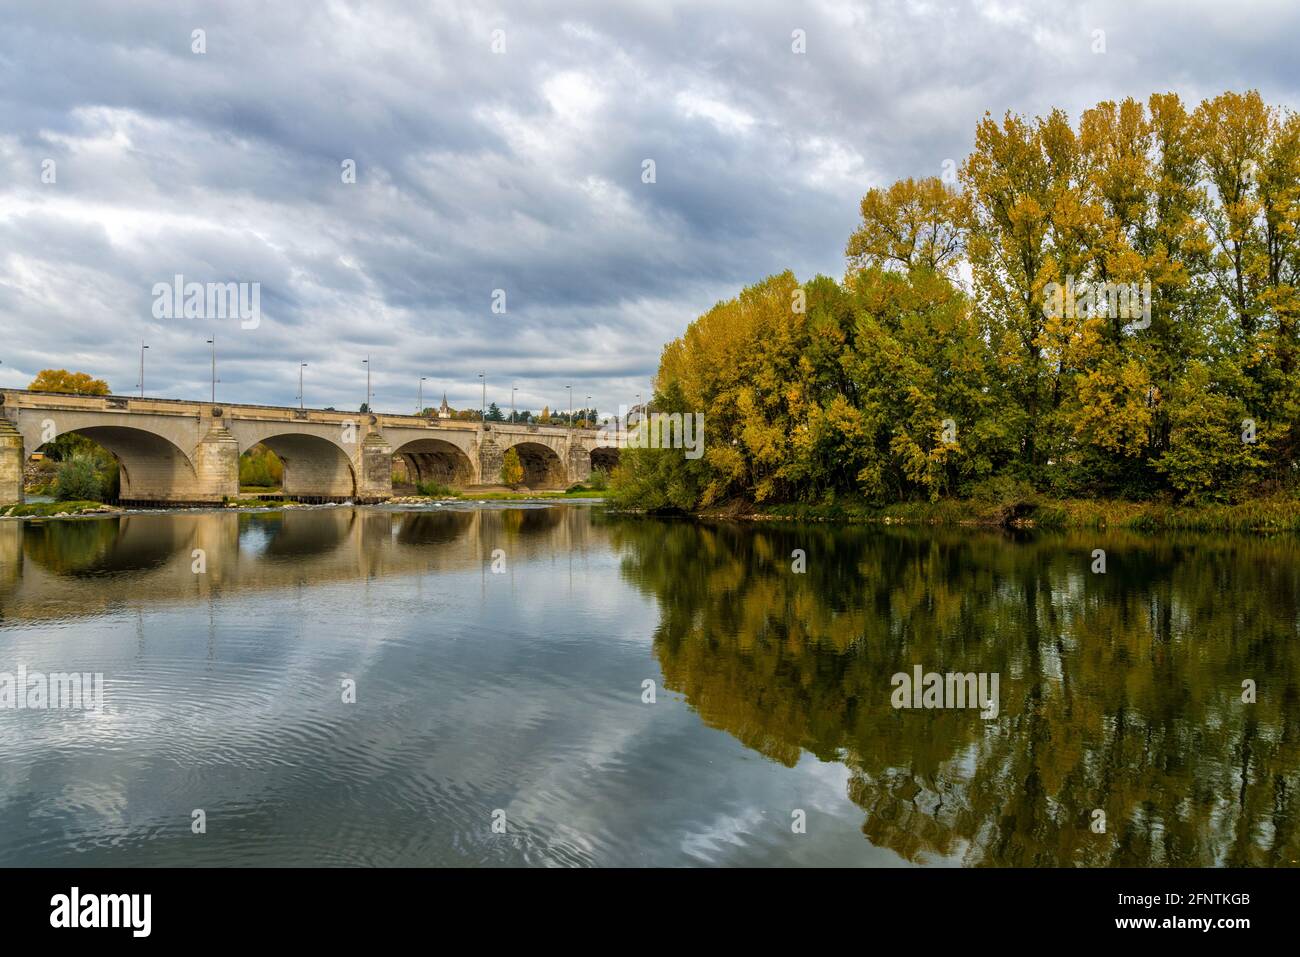 Old beautiful stone bridge Pont Wilson in Tours, France Stock Photo